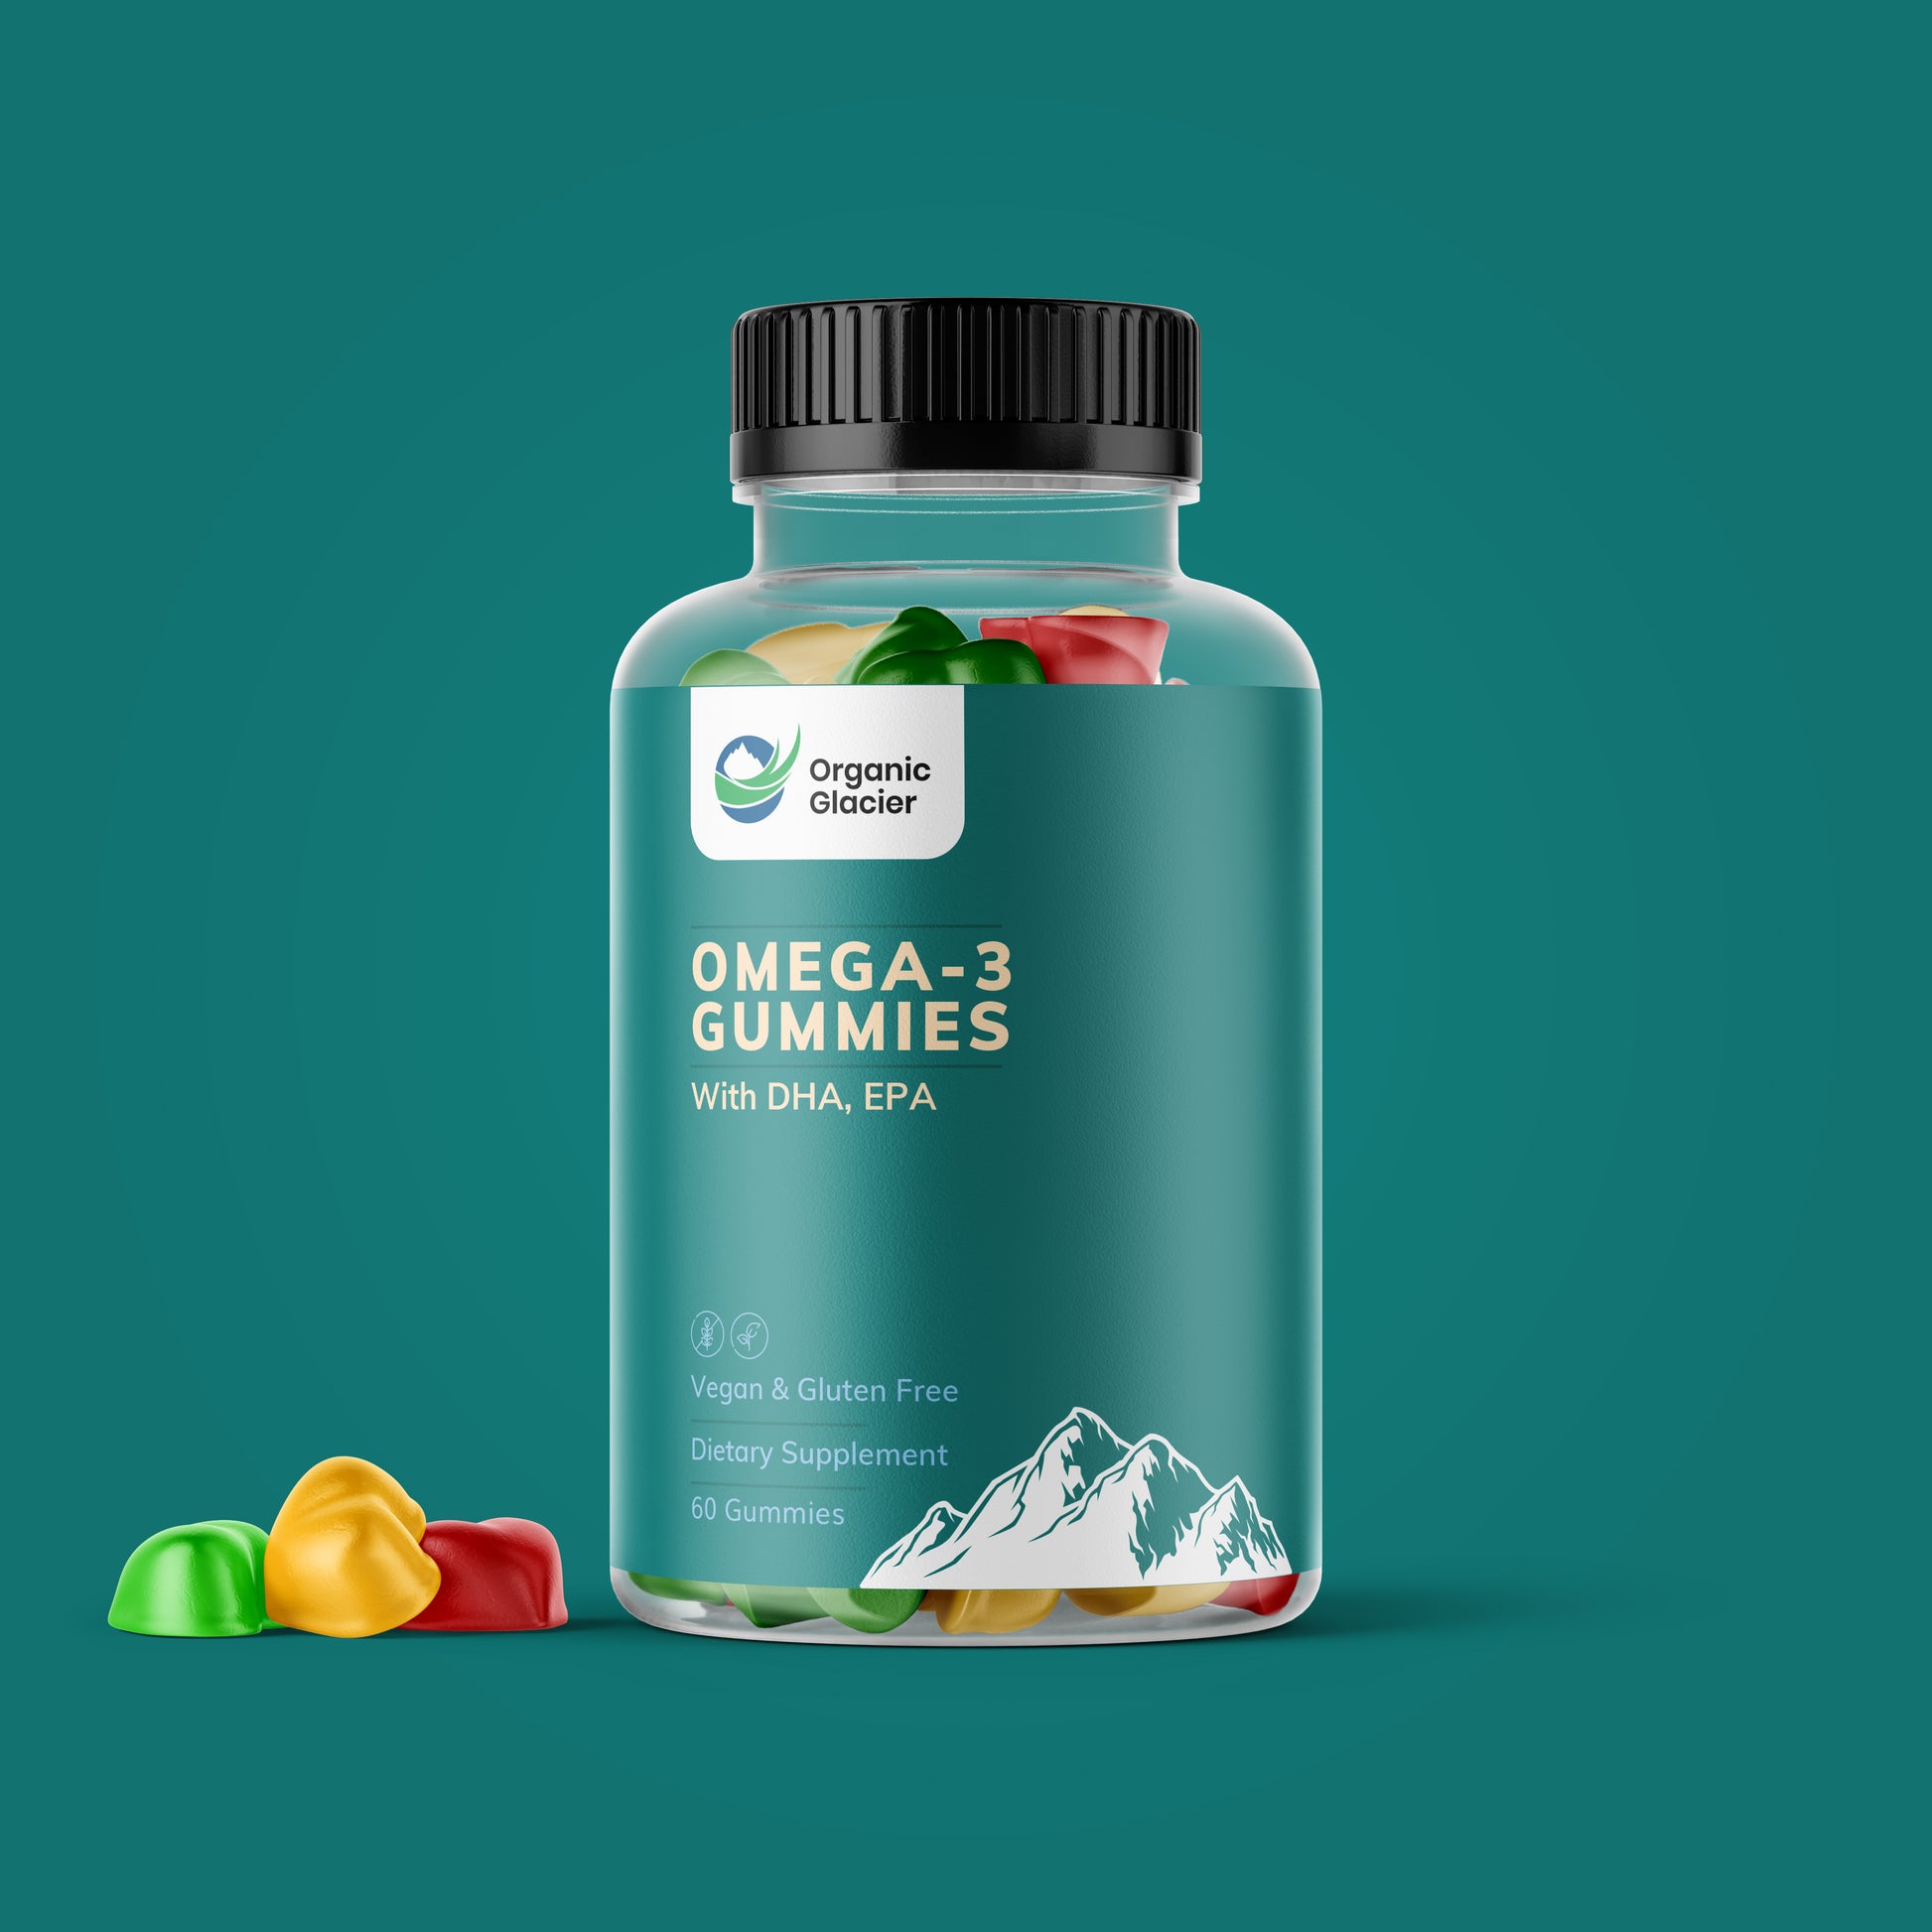 Omega-3 Gummies - Organic Glacier 